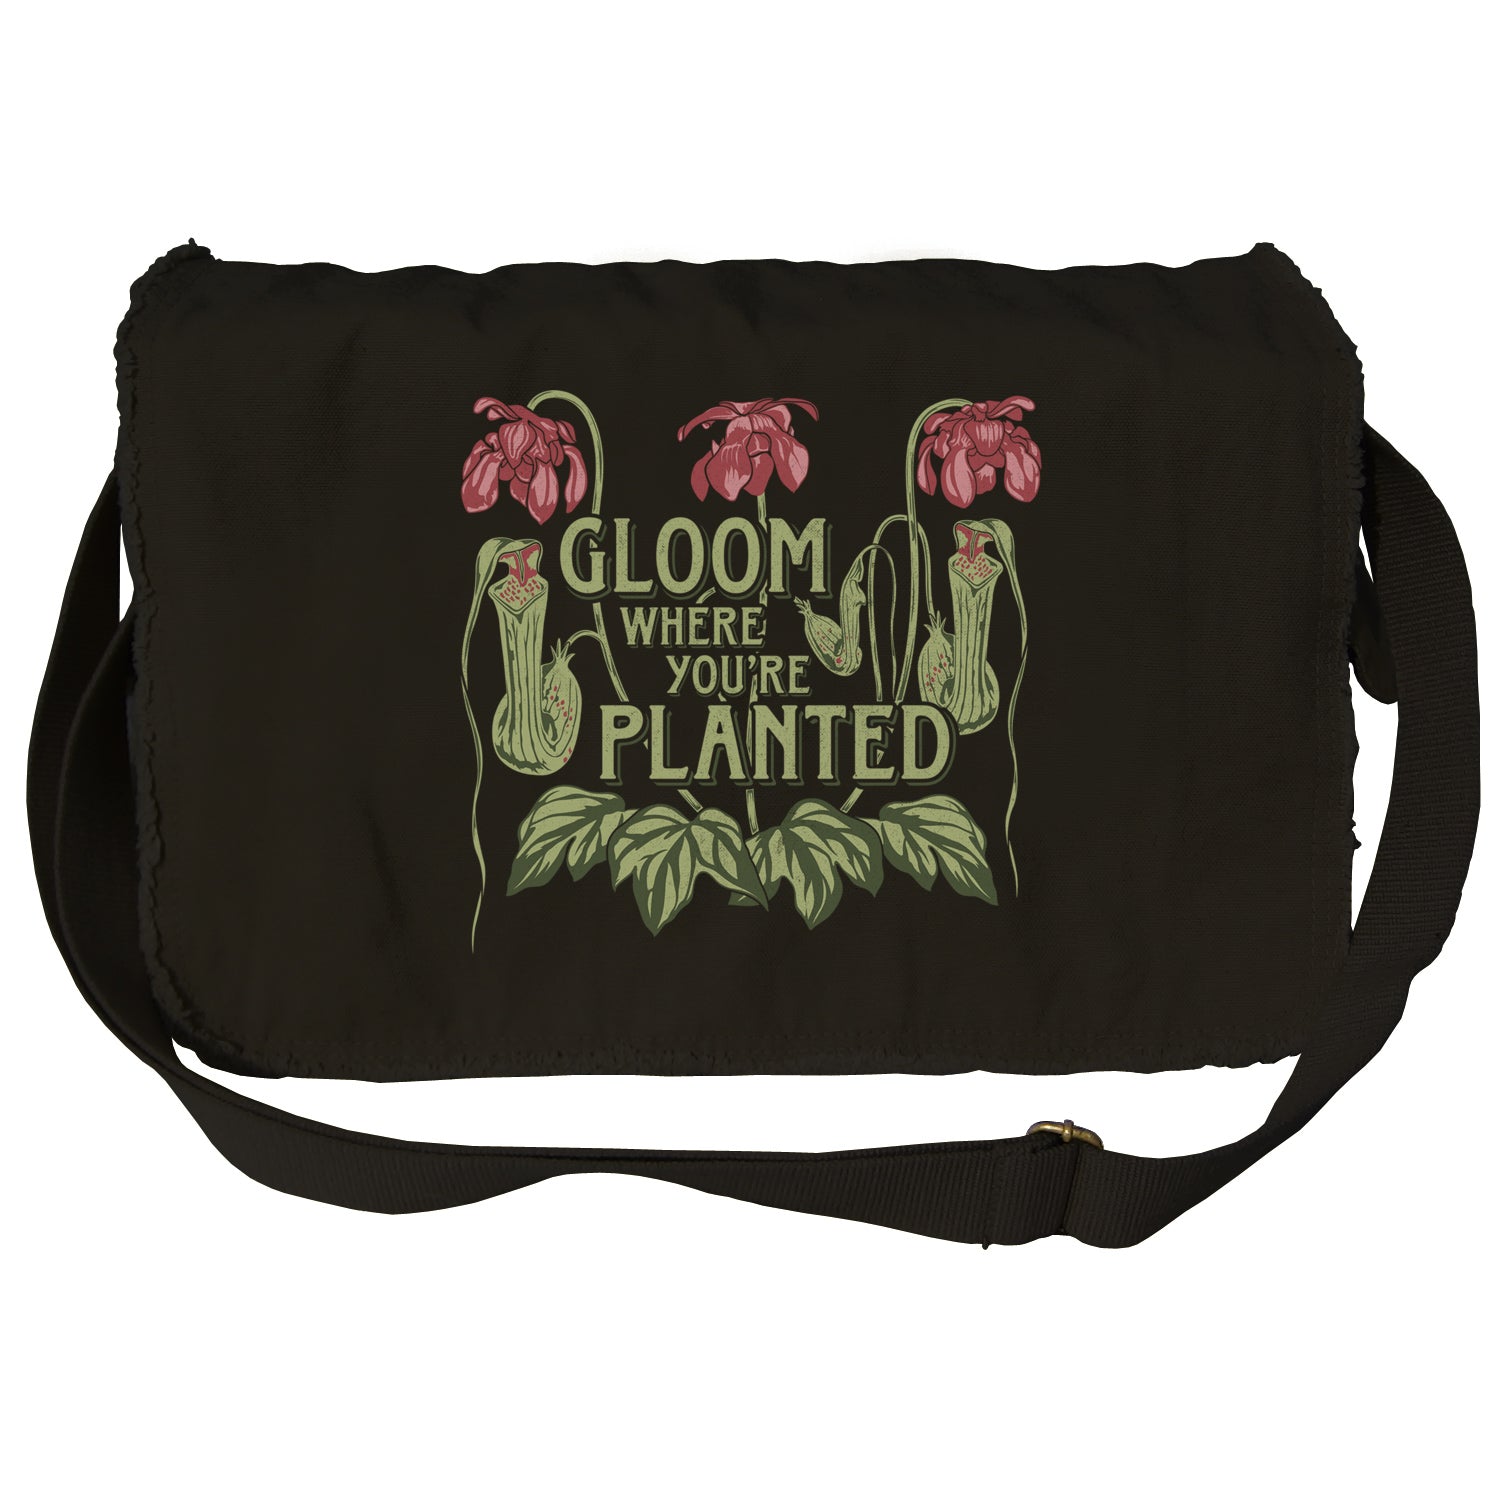 Gloom Where You're Planted Messenger Bag